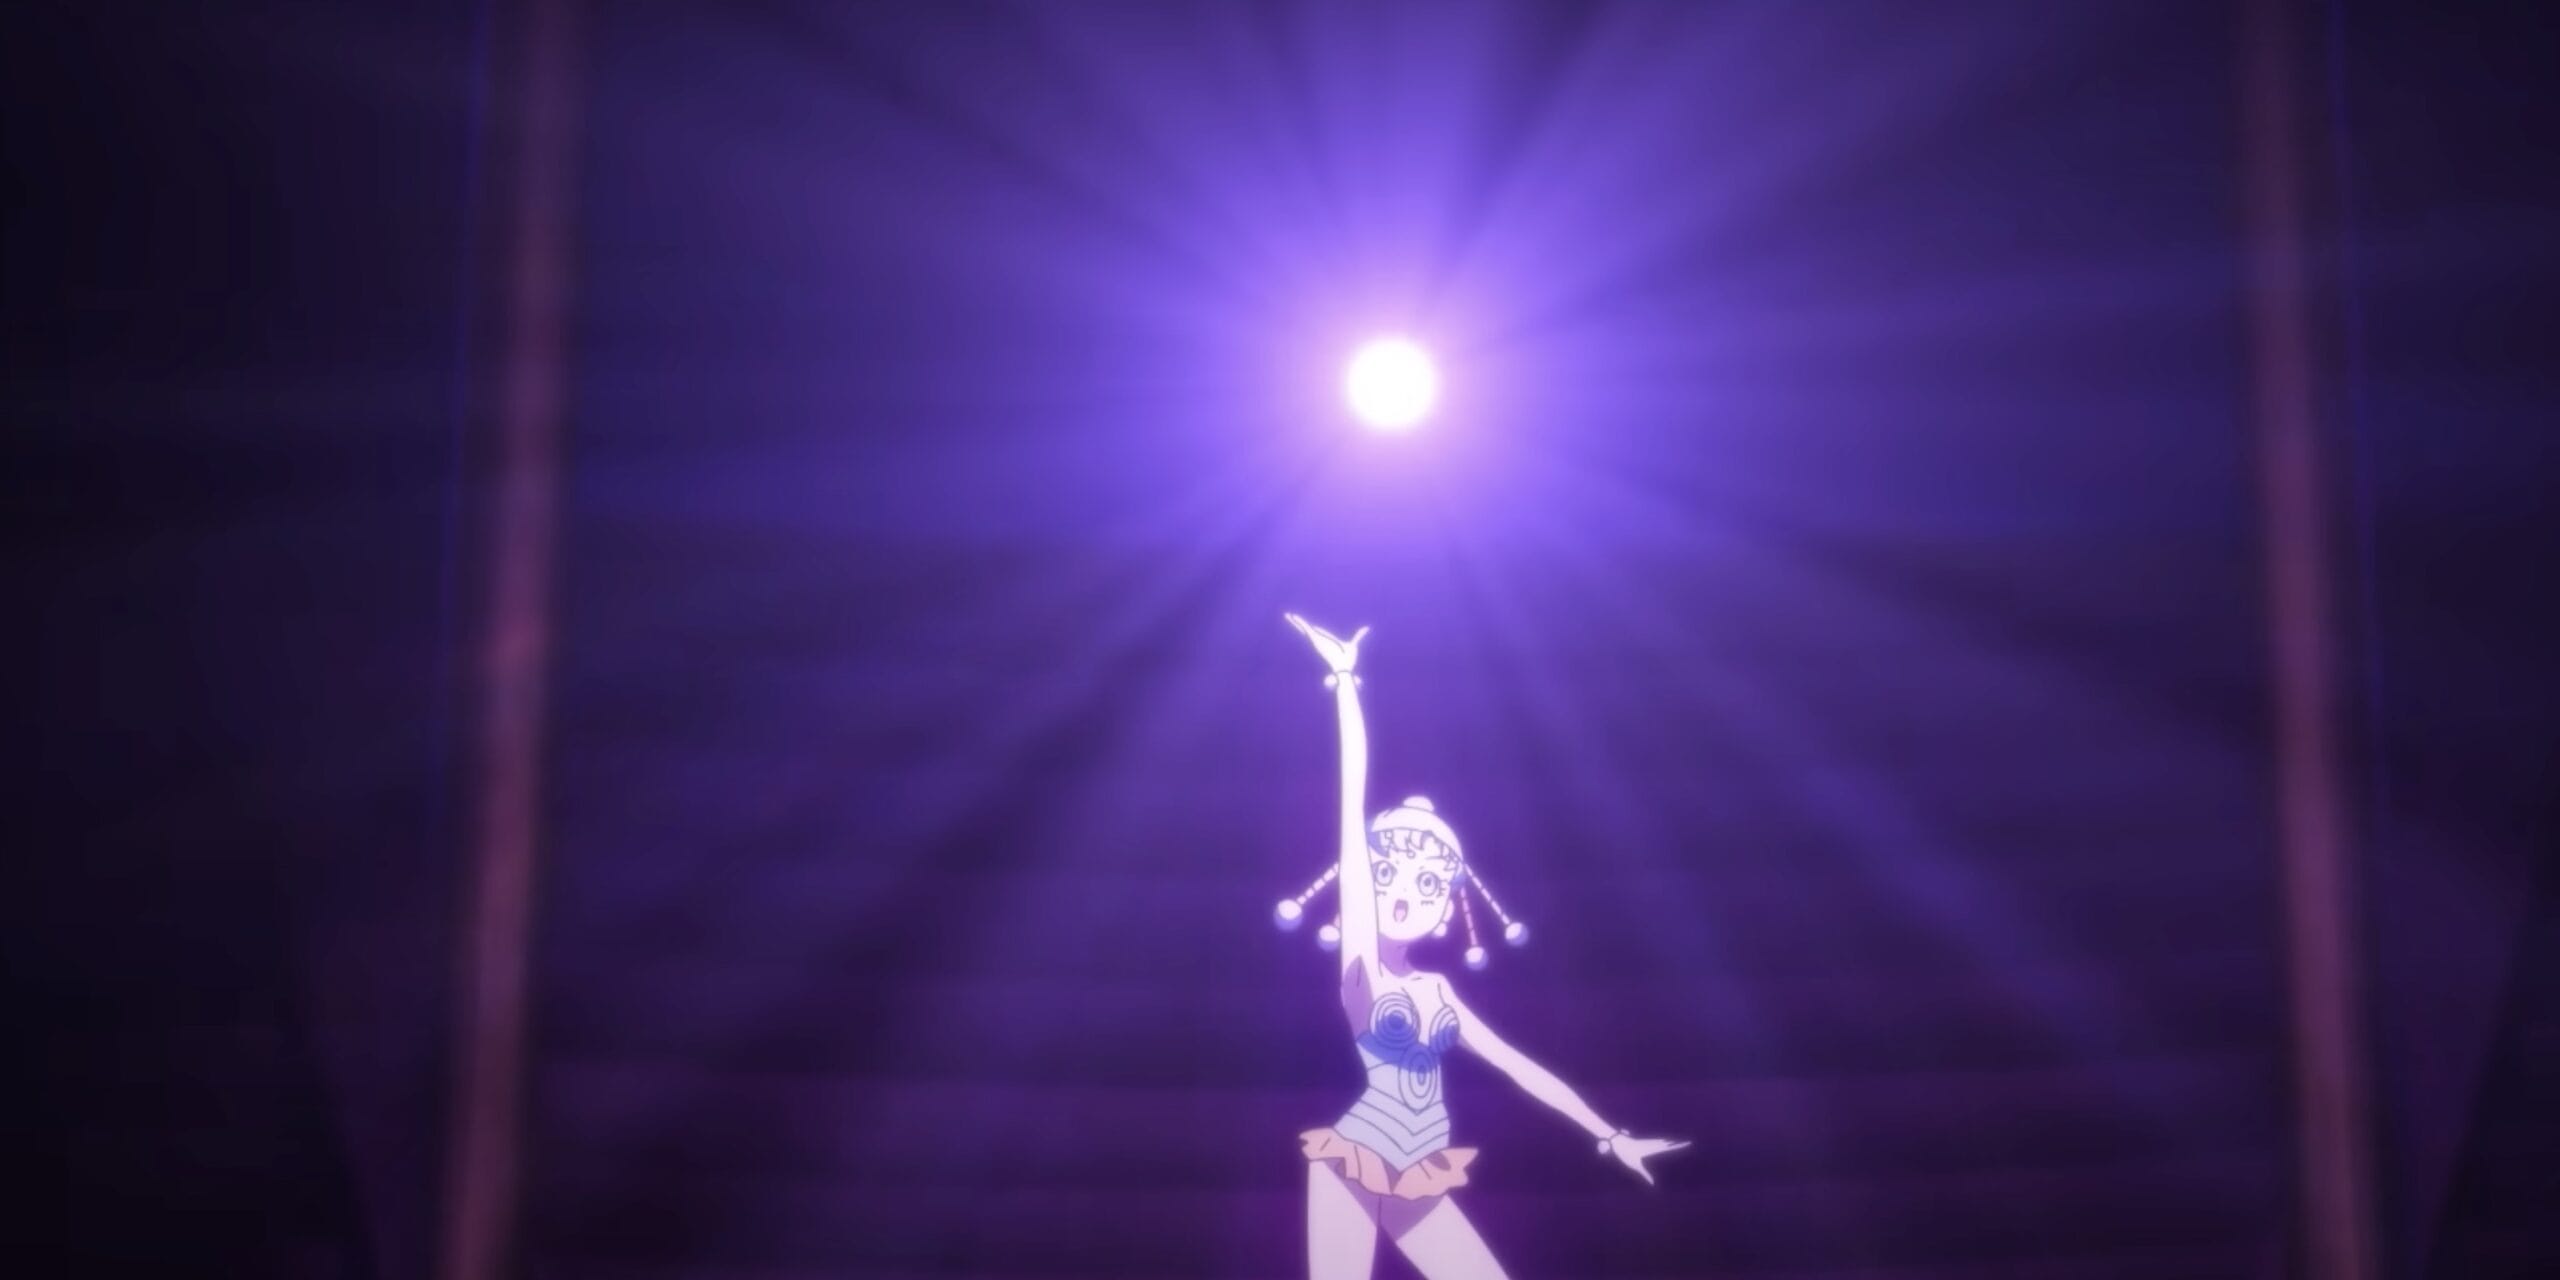 Zelina Vega from WWE Dresses Up as Sailor Moon's Queen Serenity